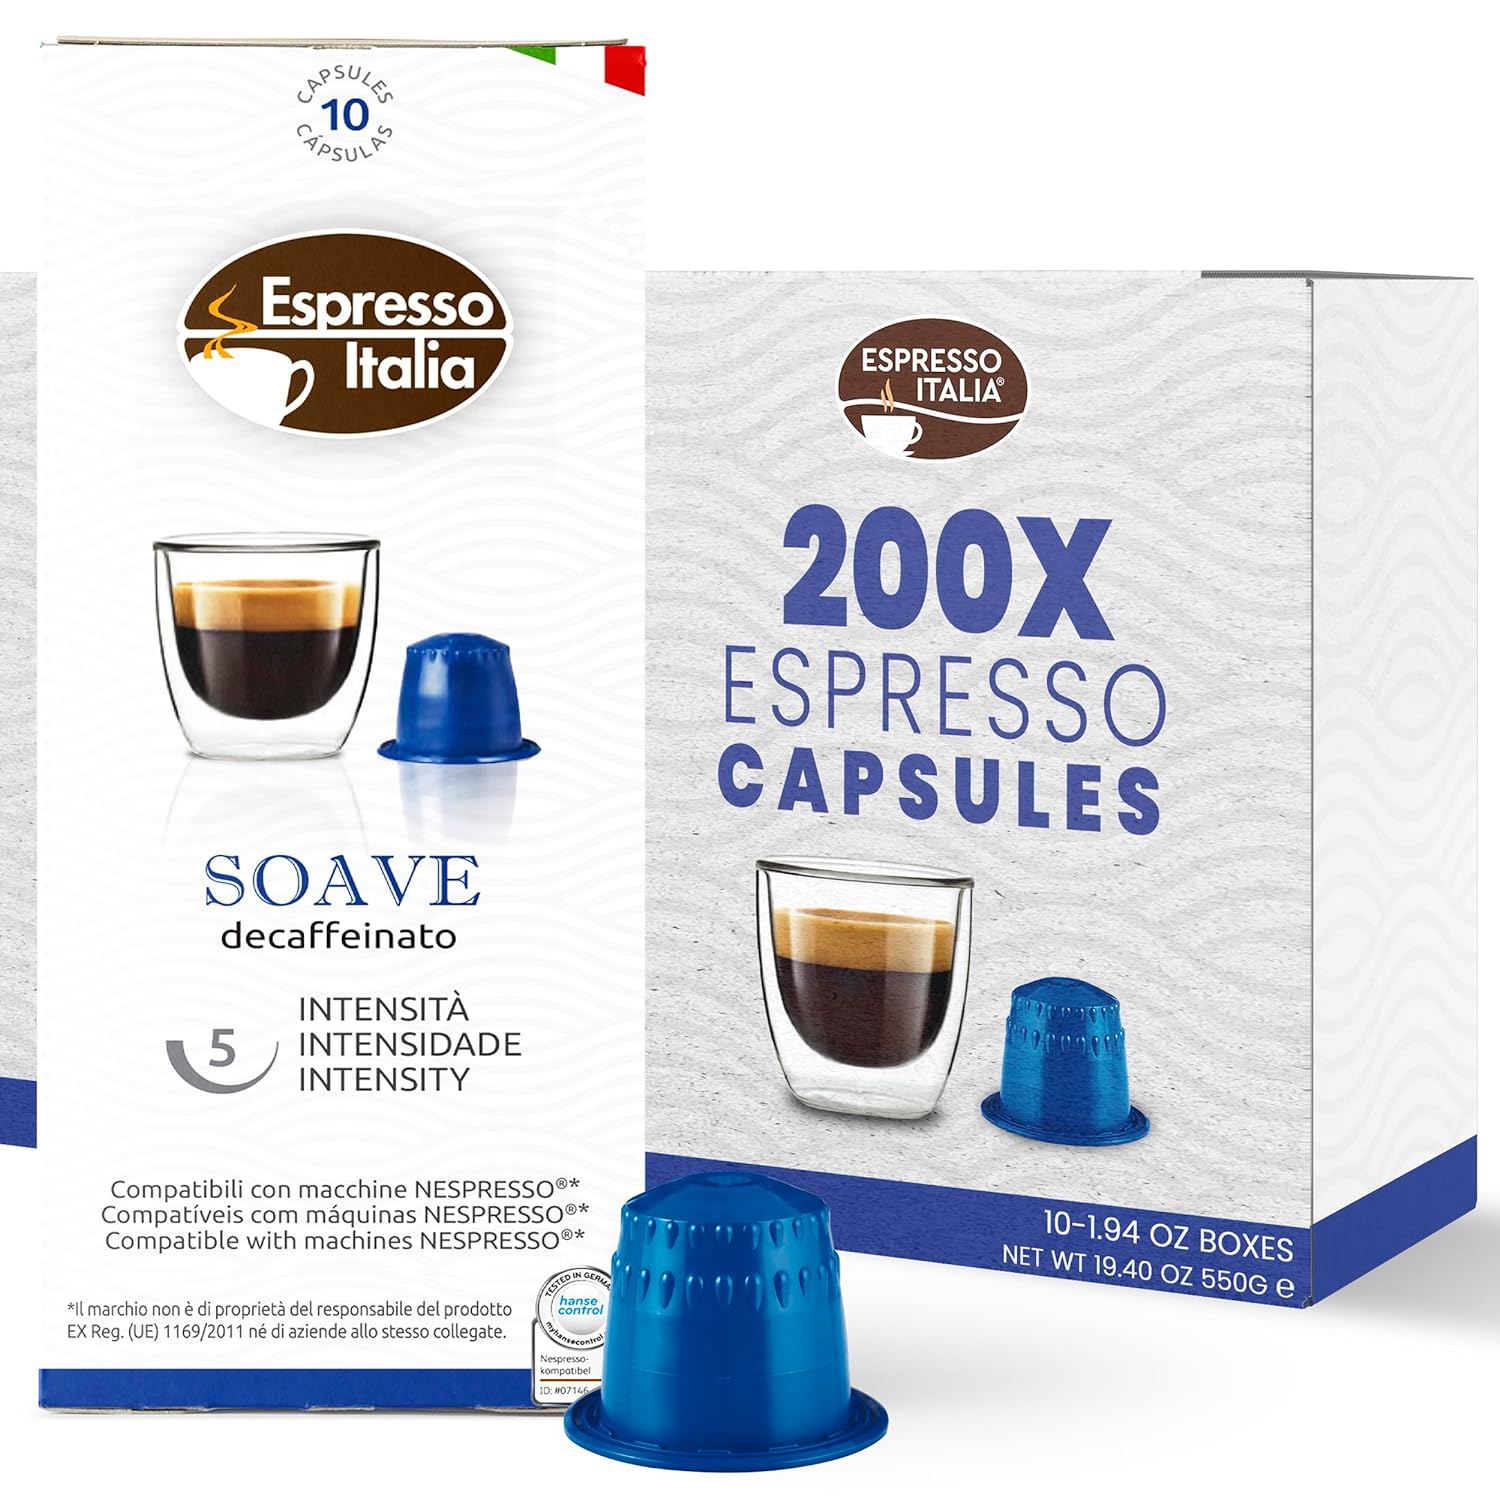 Decaffeinated Nespresso Compatible Capsules - 200 Espresso Italia Decaf Nespresso Coffee Capsules for Nespresso machines. SOAVE Italian Coffee blend, Bold intensity